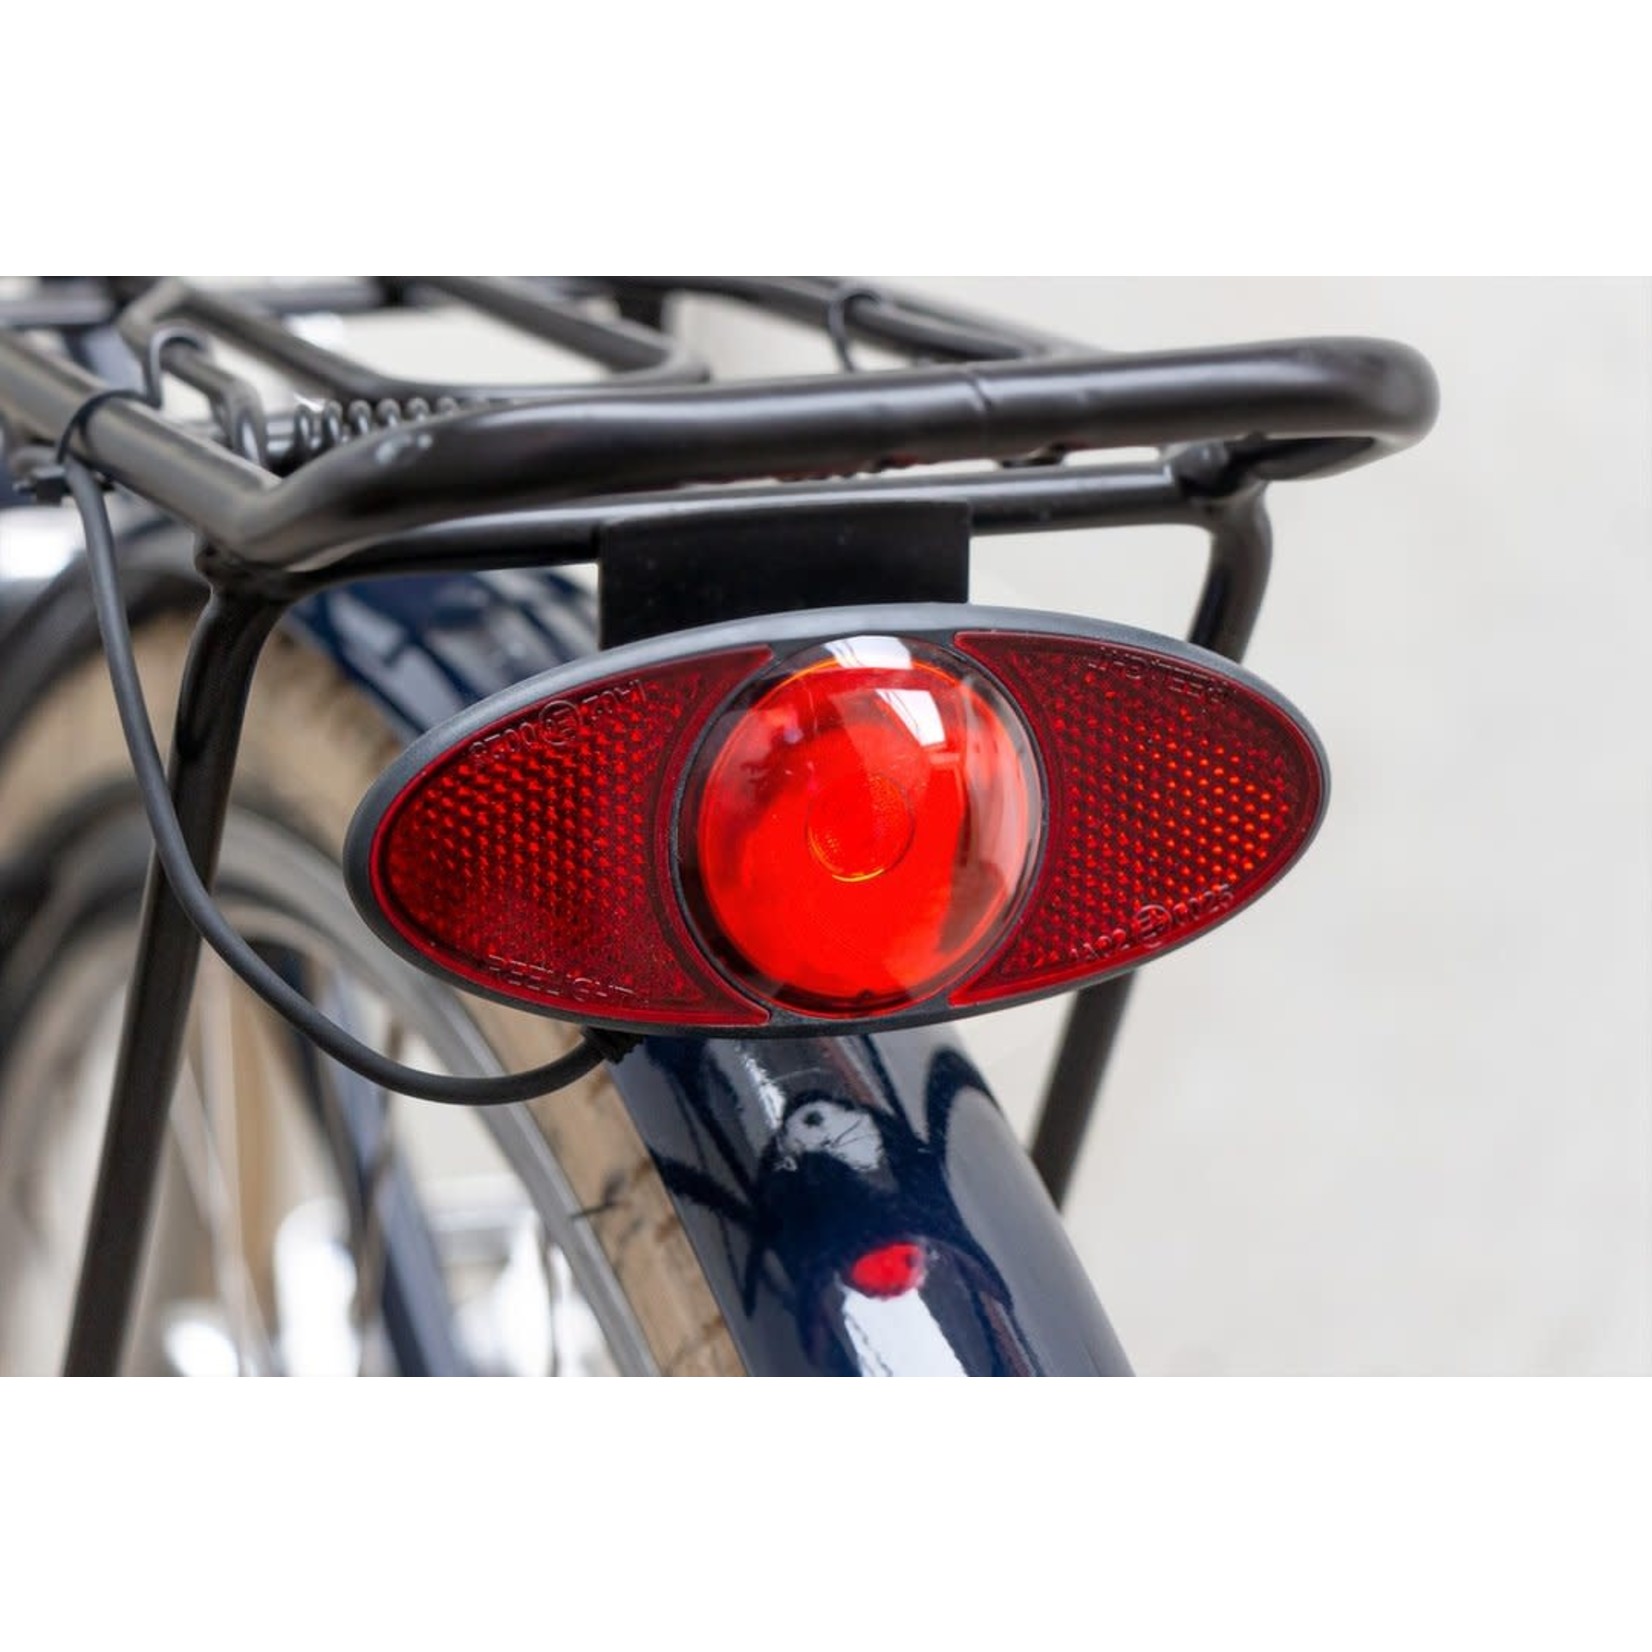 Reelight Rear Light for Carrier Rack - St Kilda Cycles